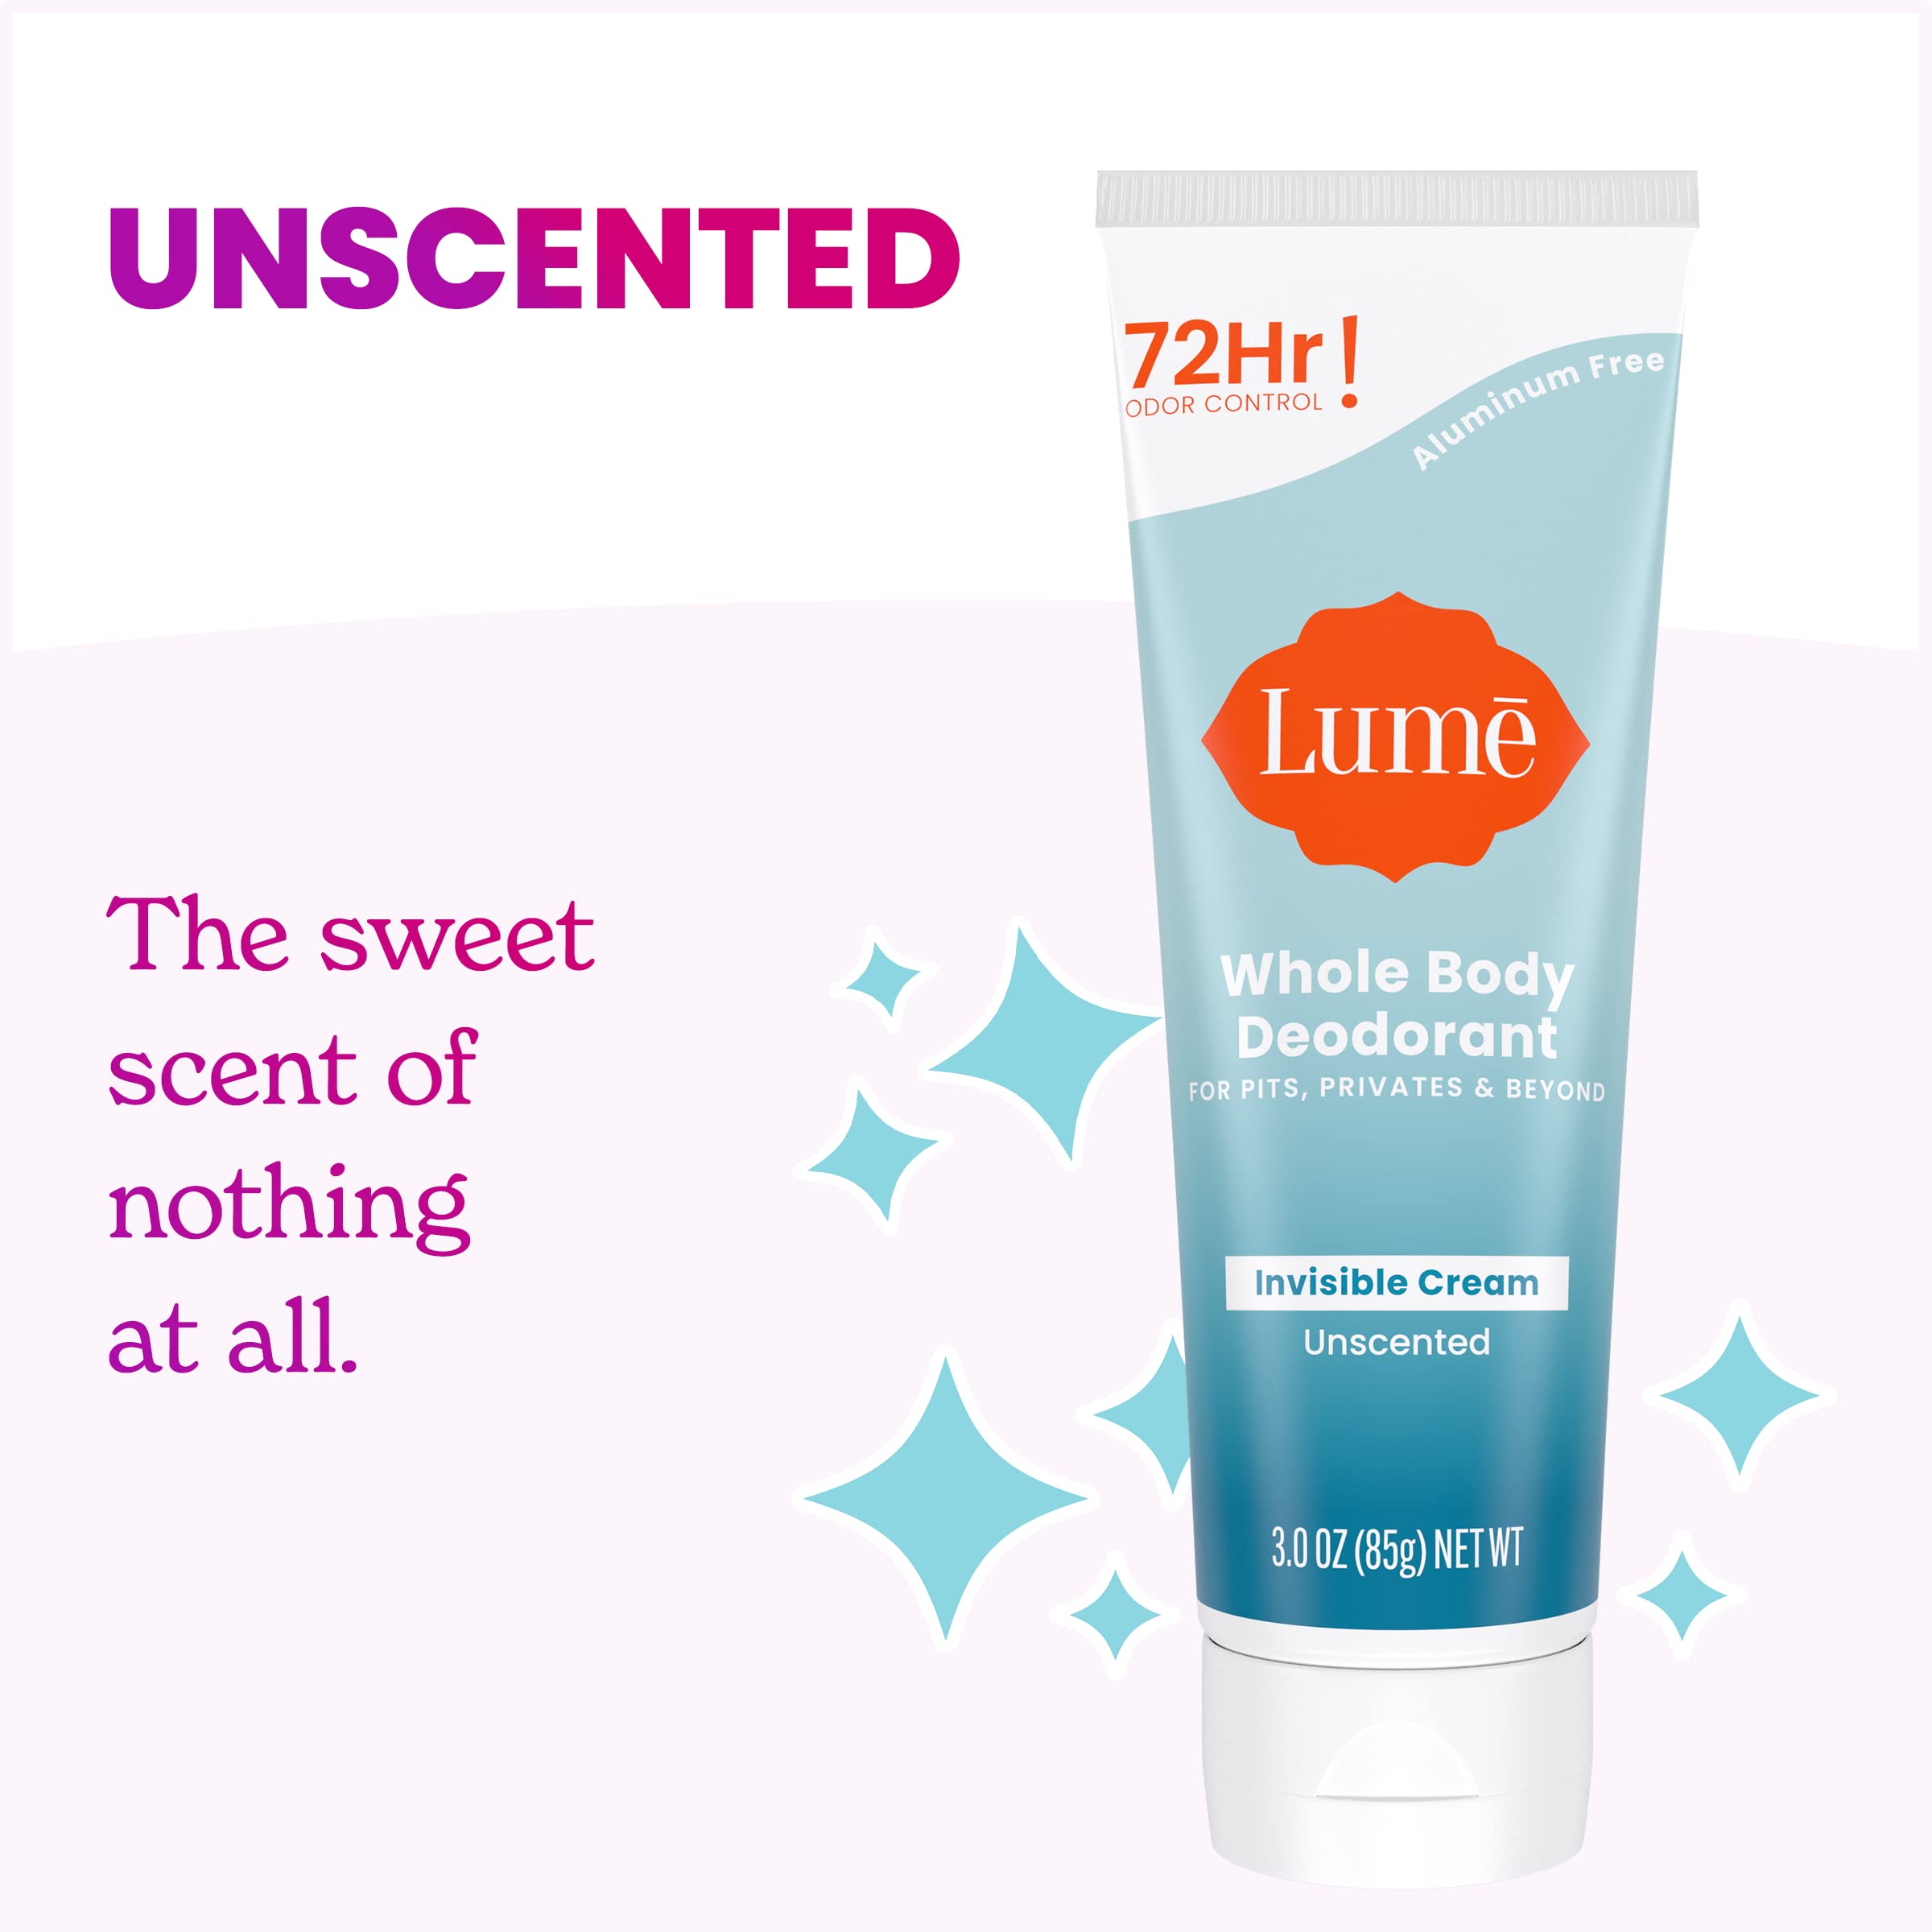 Lume Whole Body Deodorant - Invisible Cream Tube - 72 Hour Odor Control - Aluminum Free, Baking Soda Free, Skin Safe - 3.0 ounce (Unscented)